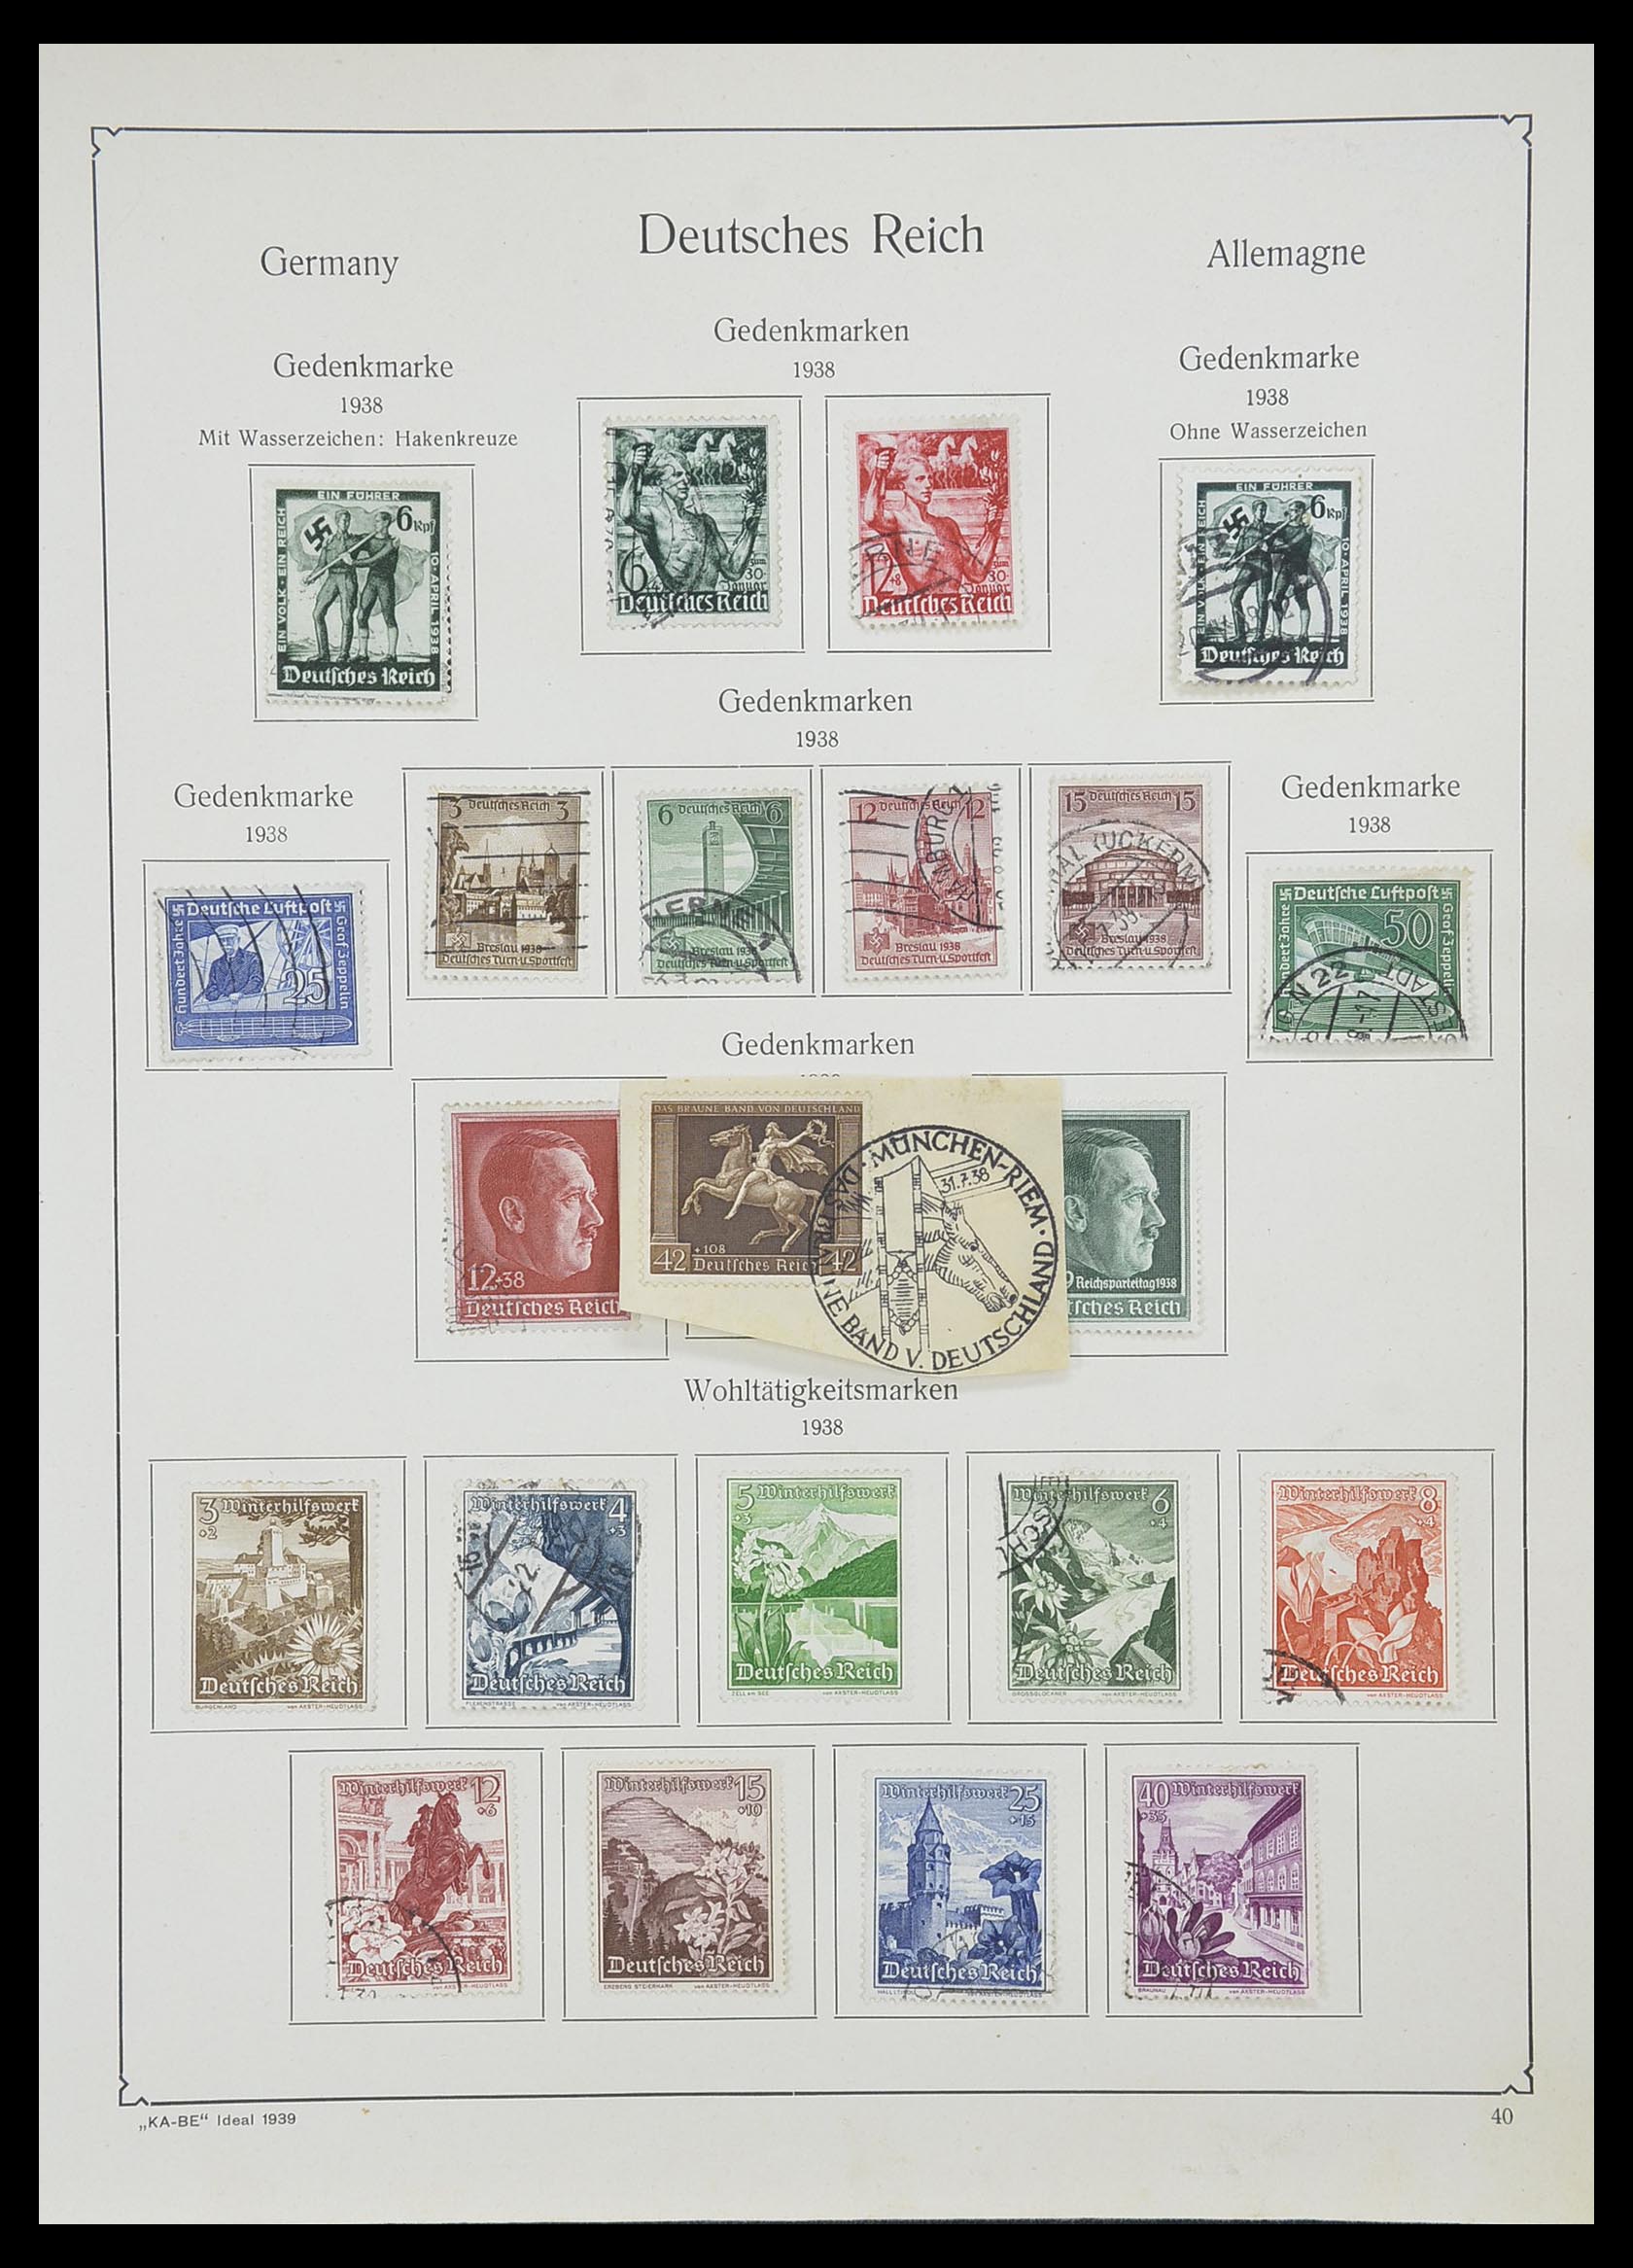 33359 049 - Stamp collection 33359 German Reich 1872-1945.